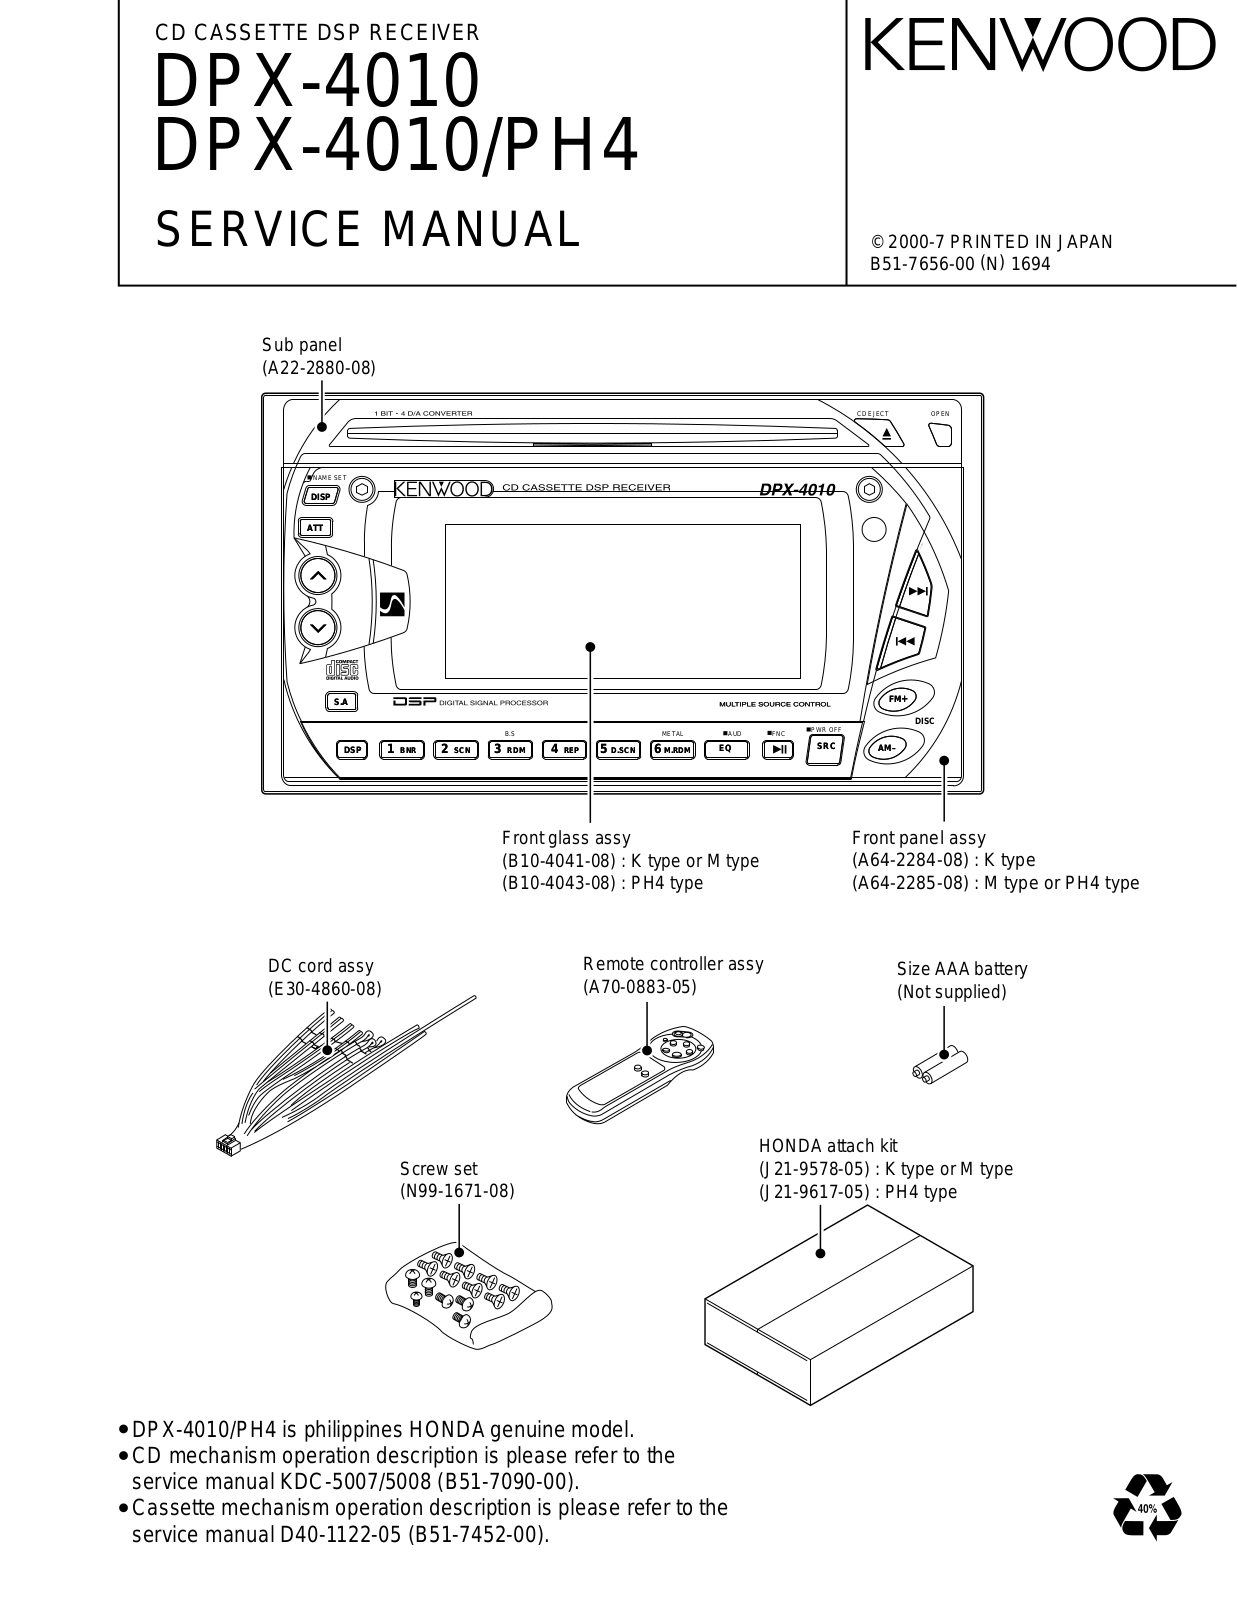 Kenwood DPX-4010, DPX-4010-PH-4 Service manual